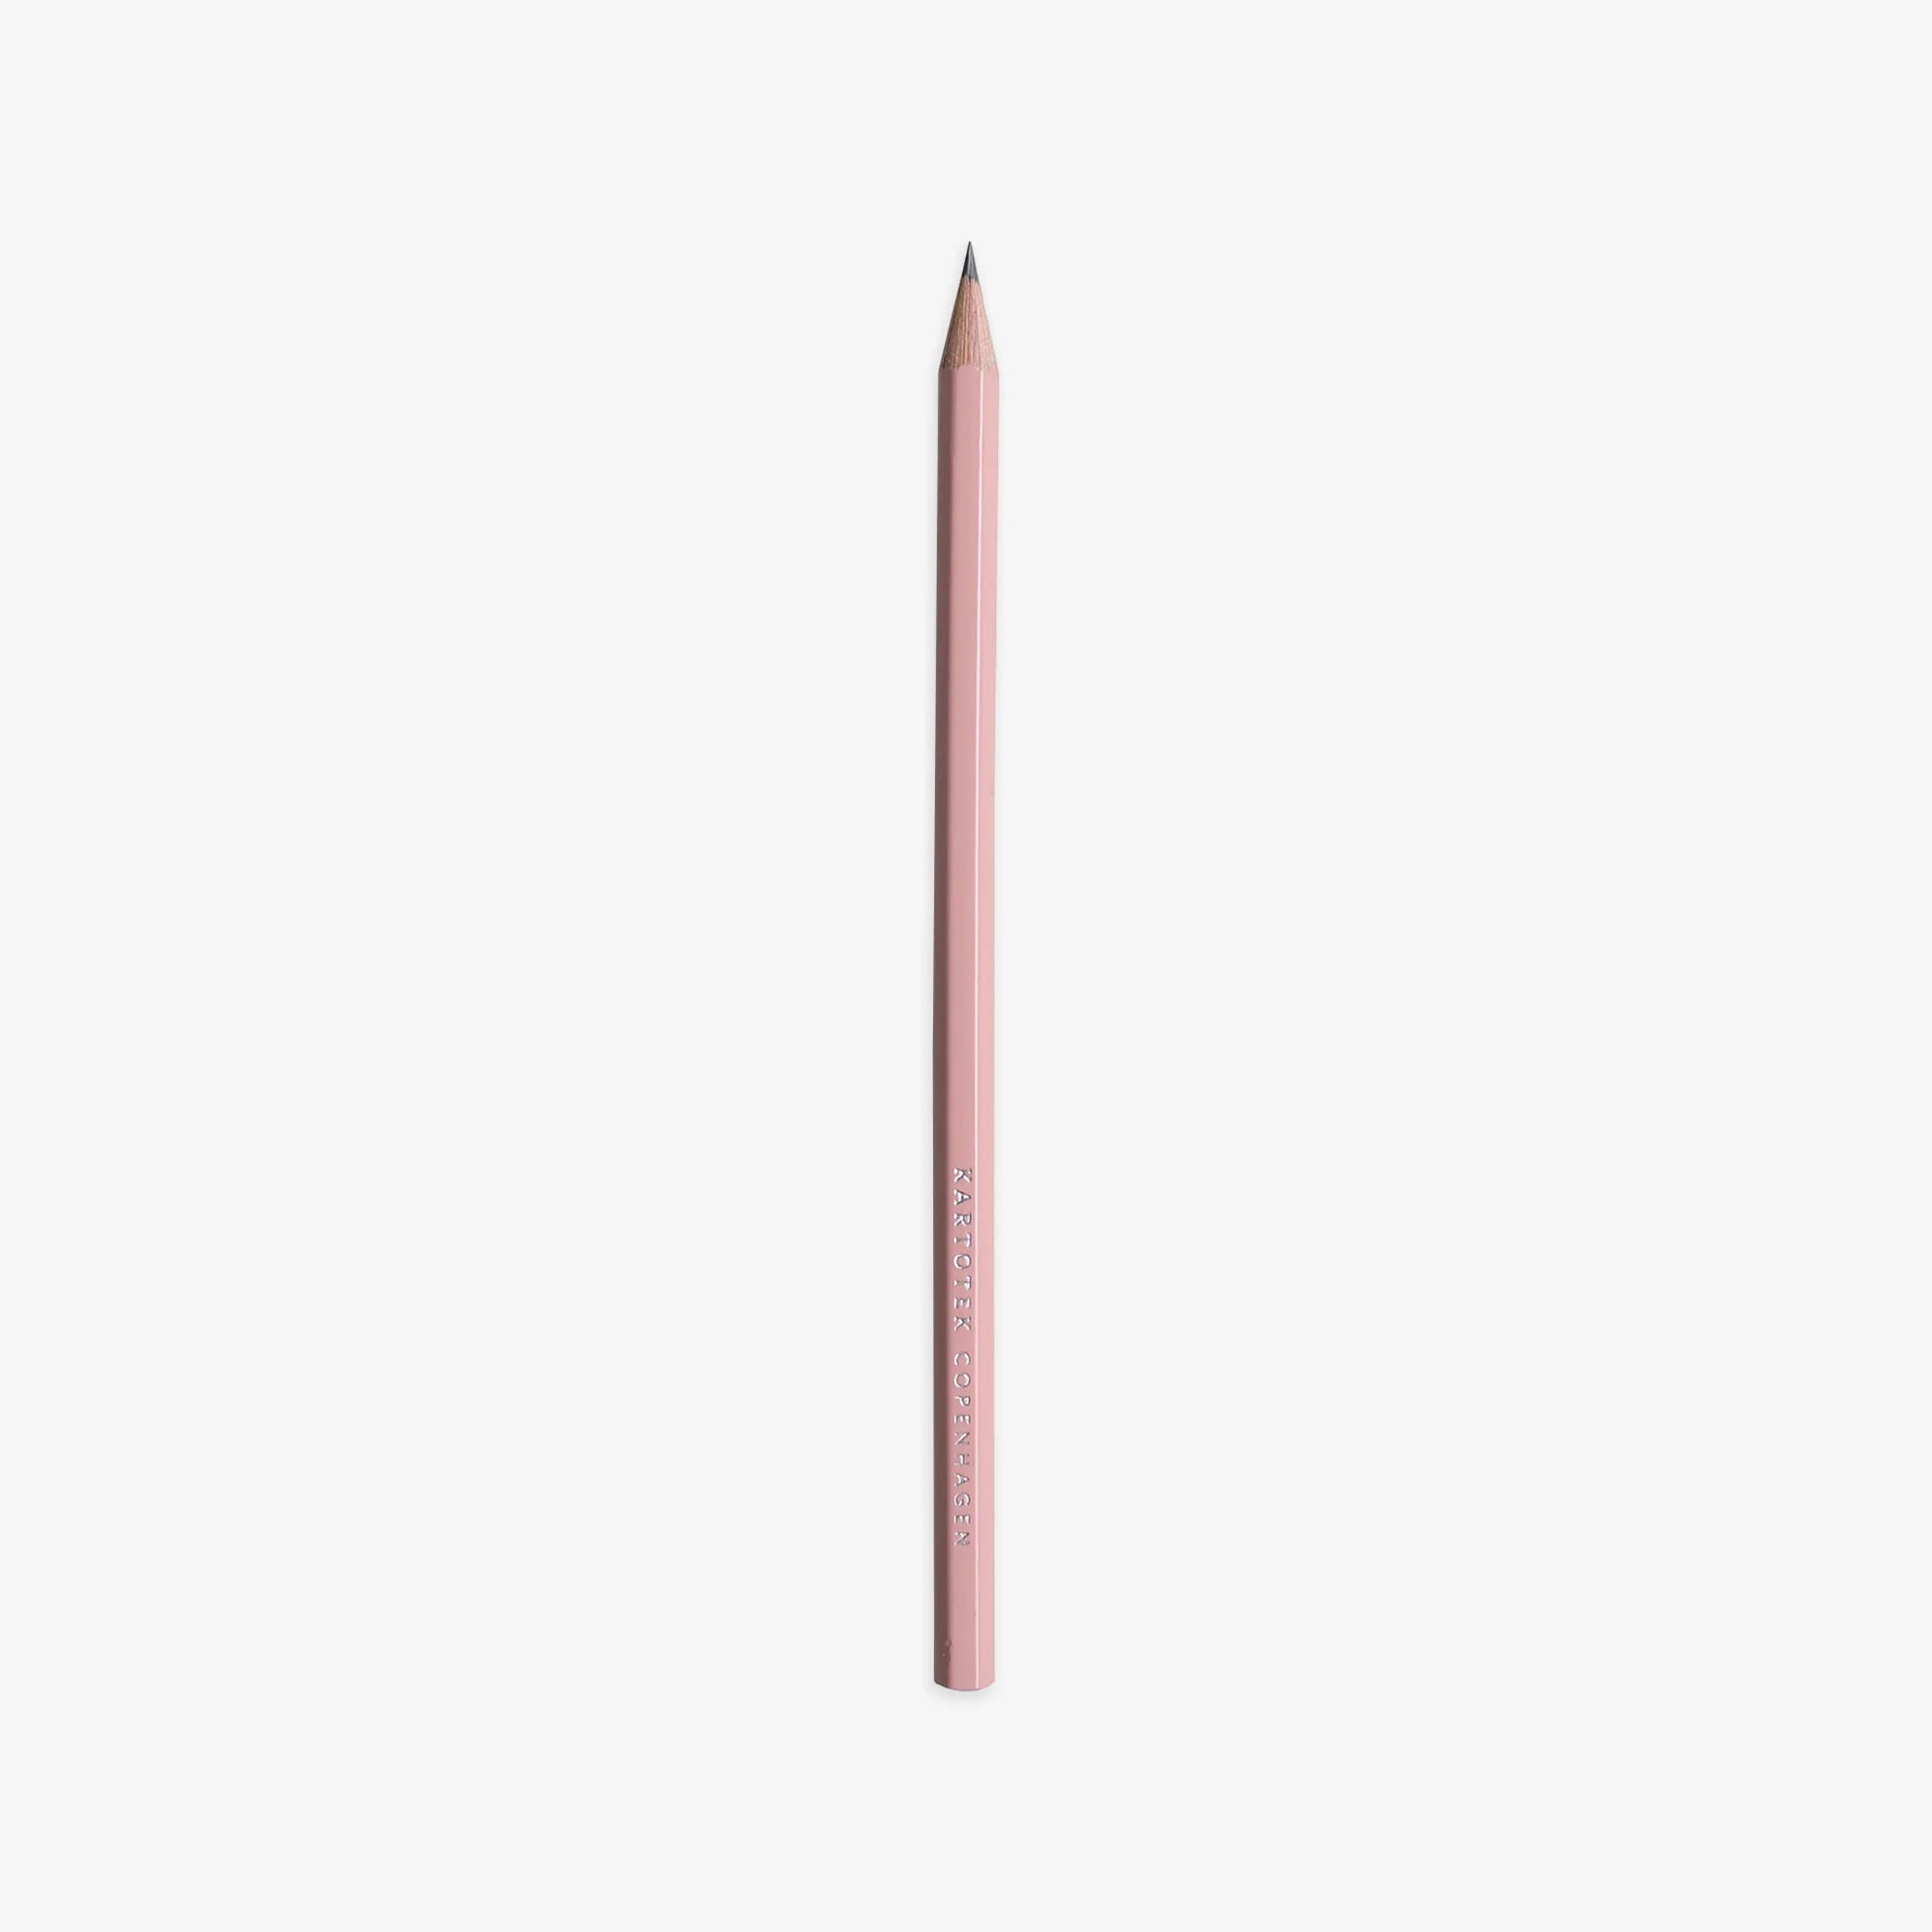 Cedar Wood Pencil / Peach